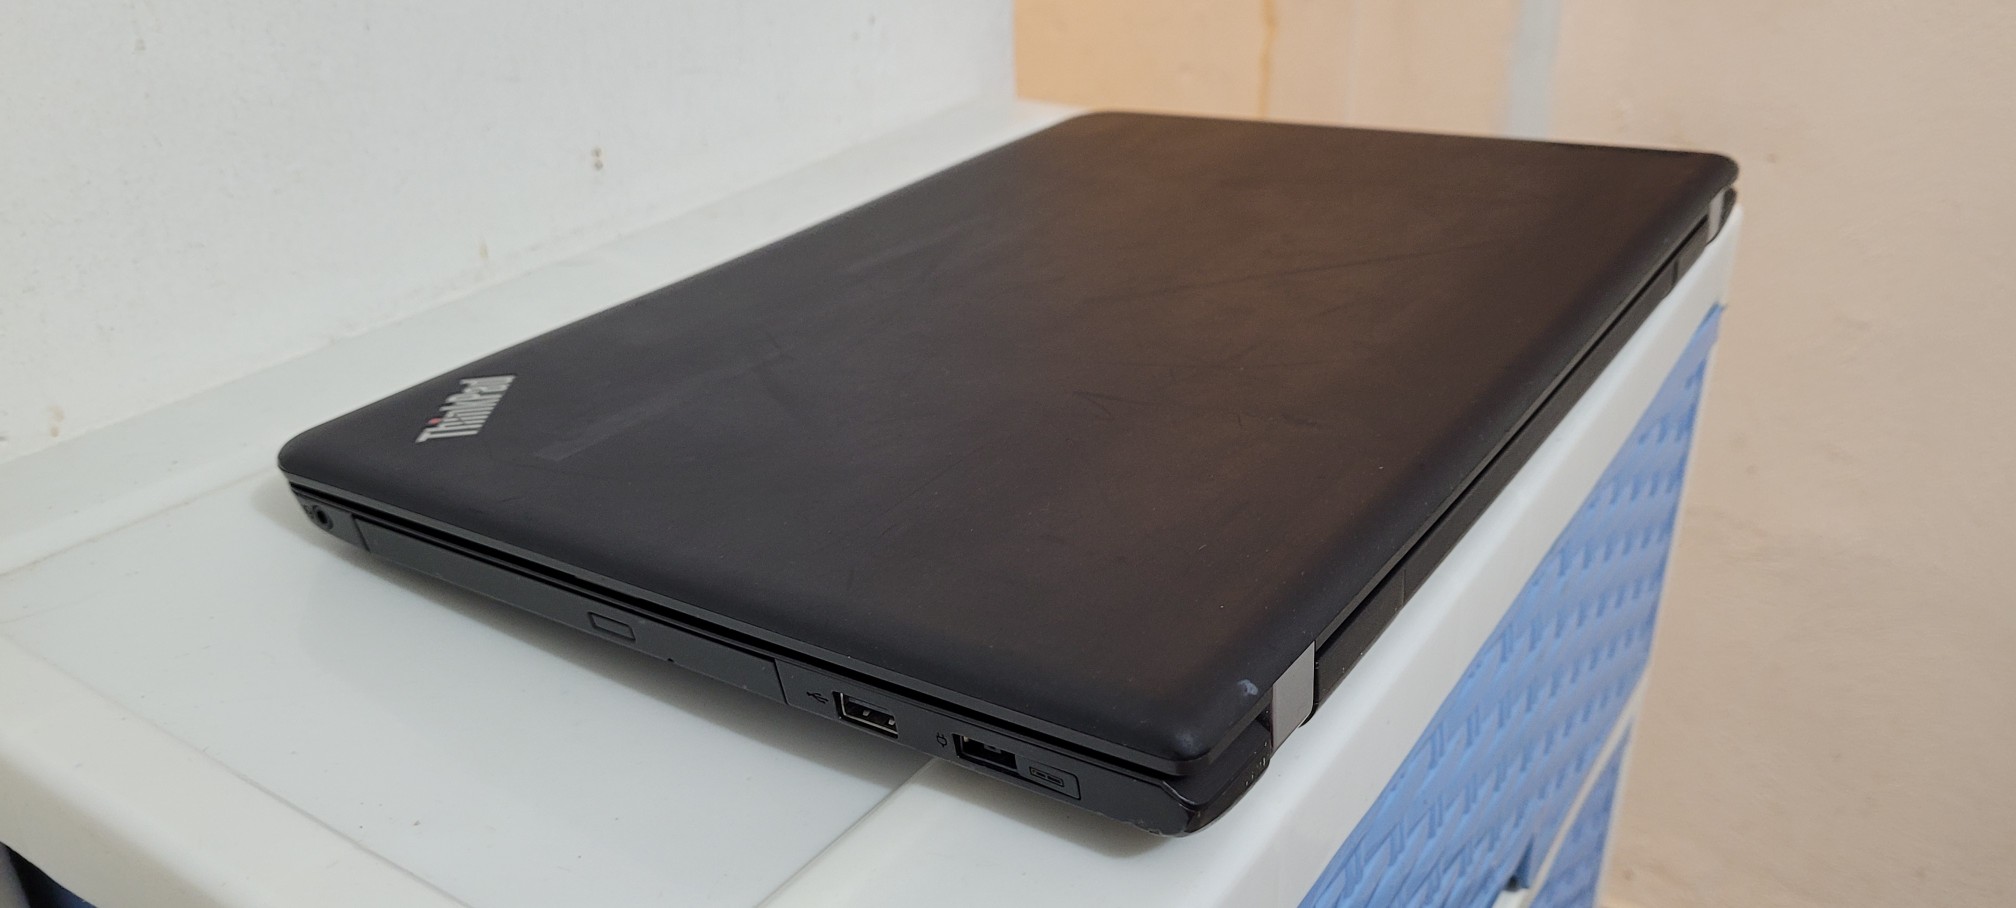 computadoras y laptops - Laptop lenovo t450 14 Pulg Core i5 Ram 16gb Disco 128gb SSD Video 8gb 2